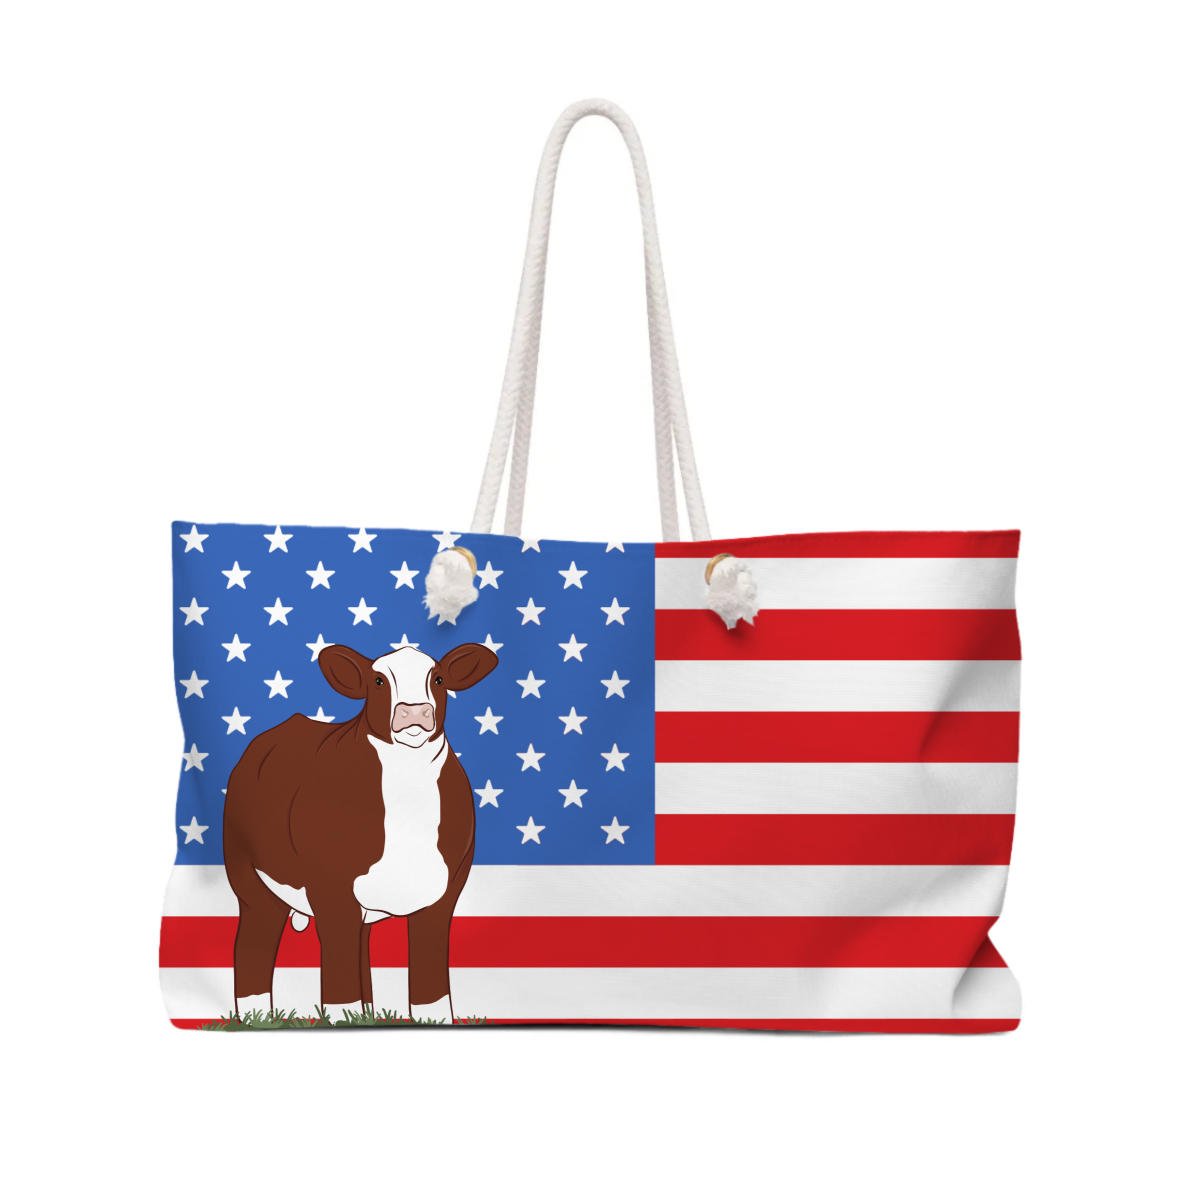 Personalized-Livestock-Tote Bag - Patriotic Pattern